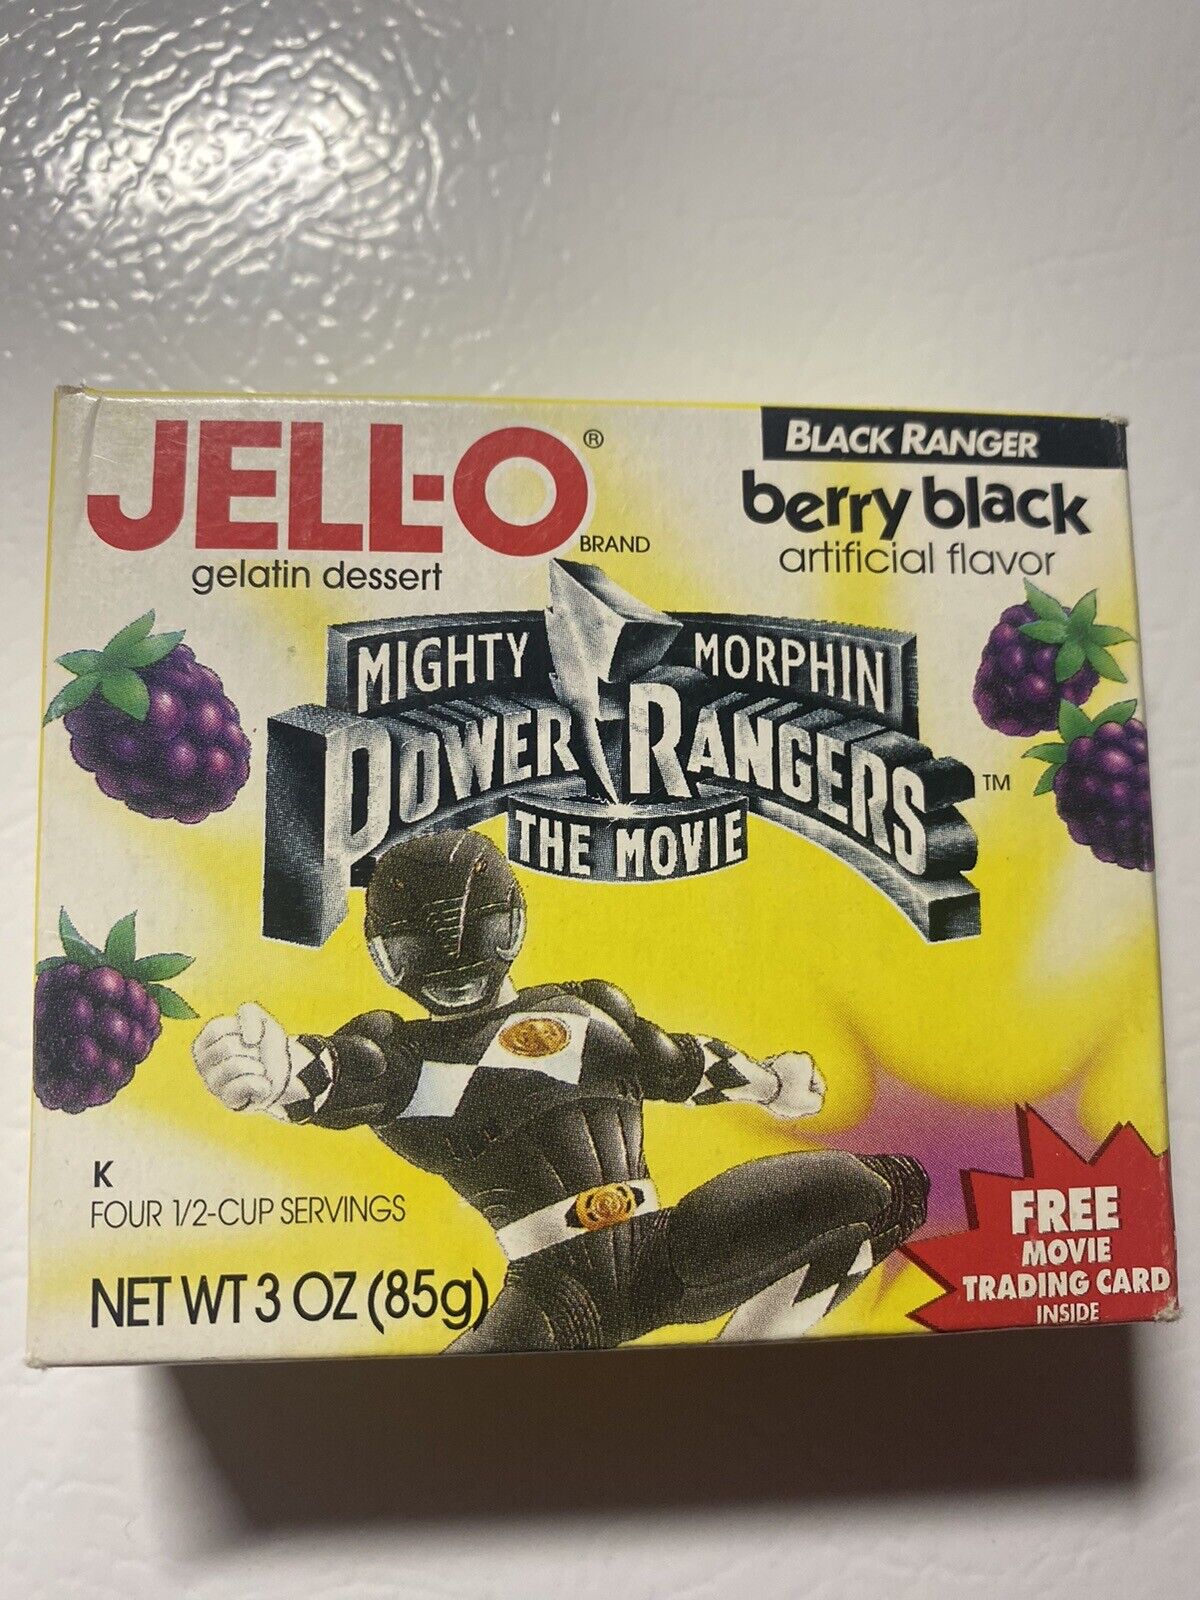 Unopened 1995 JELL-0 Mighty Morphine Powers The Movie Box - Black Ranger Berry